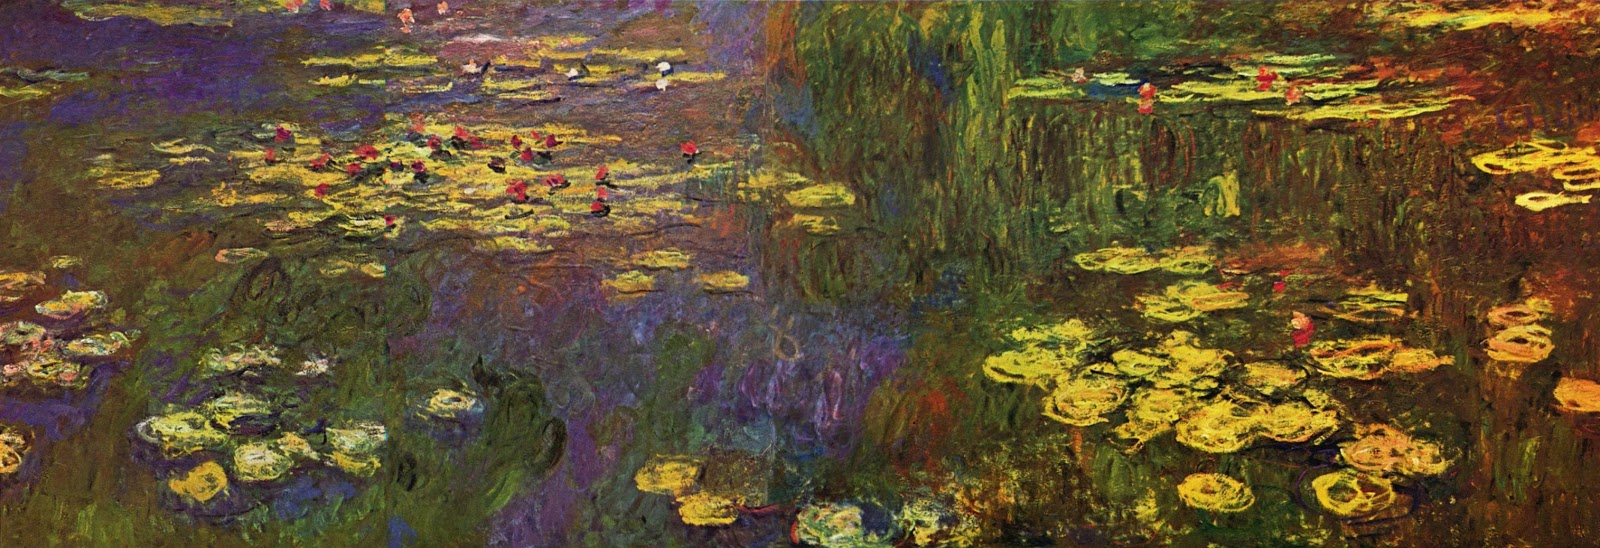 Claude+Monet-1840-1926 (551).jpg